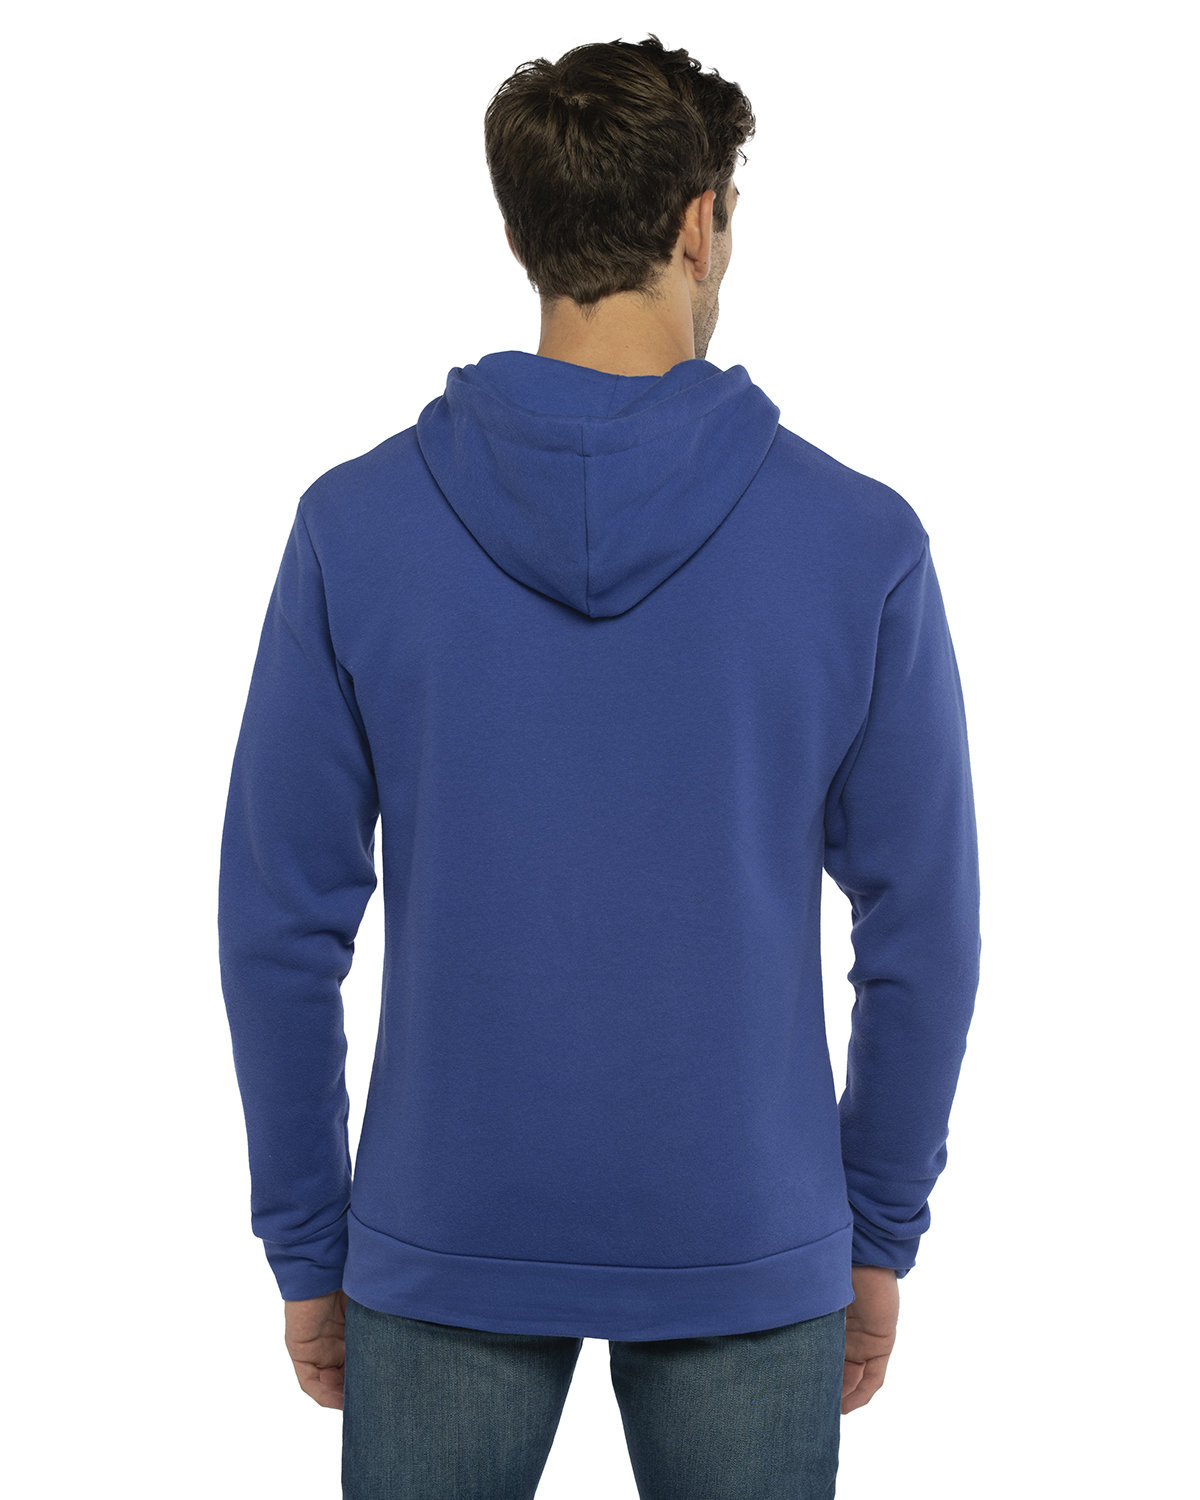 Next Level Apparel Unisex Santa Cruz Pullover Hooded Sweatshirt ...